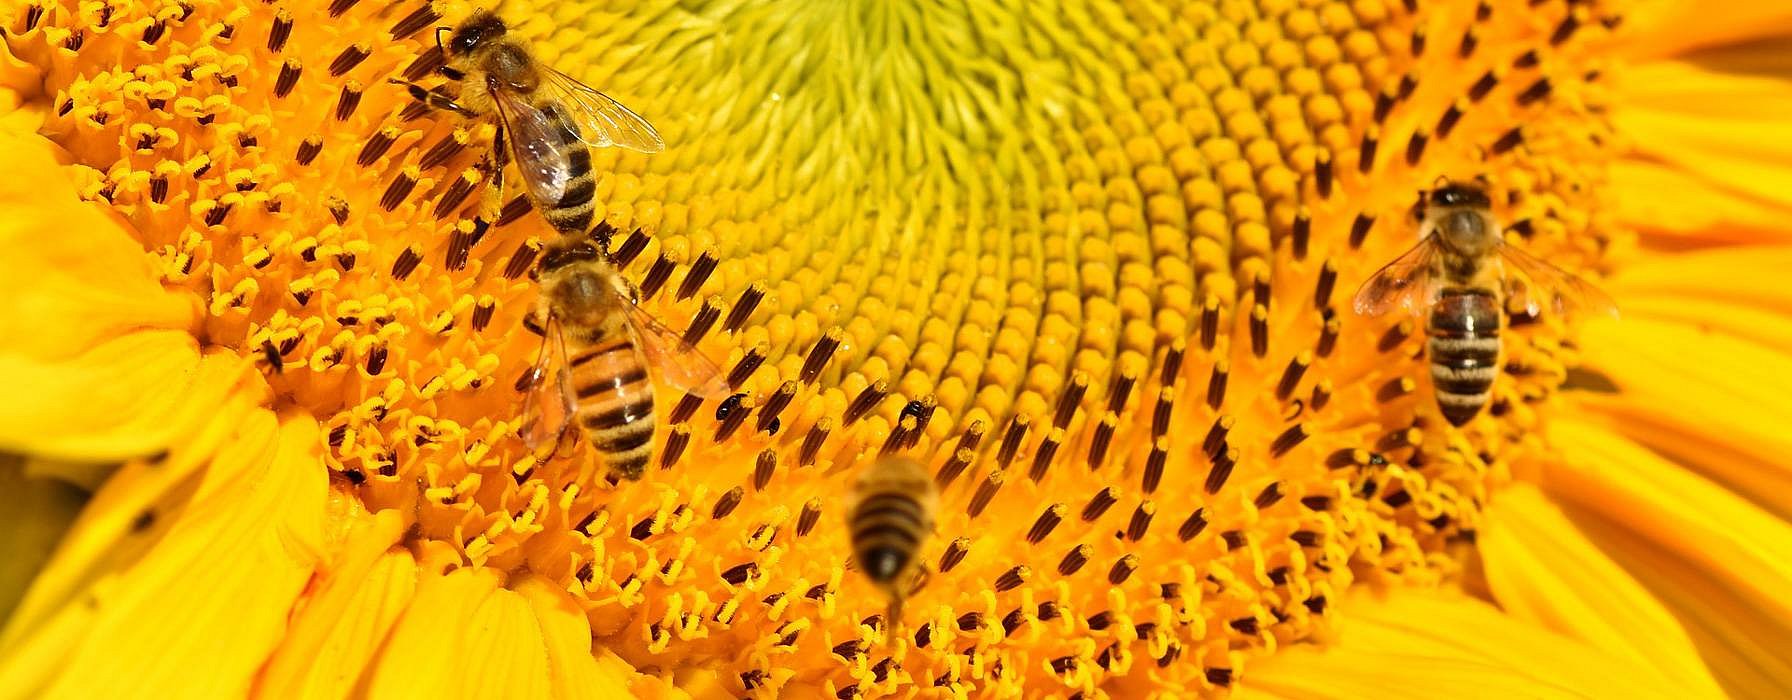 hd_sunflower_bees